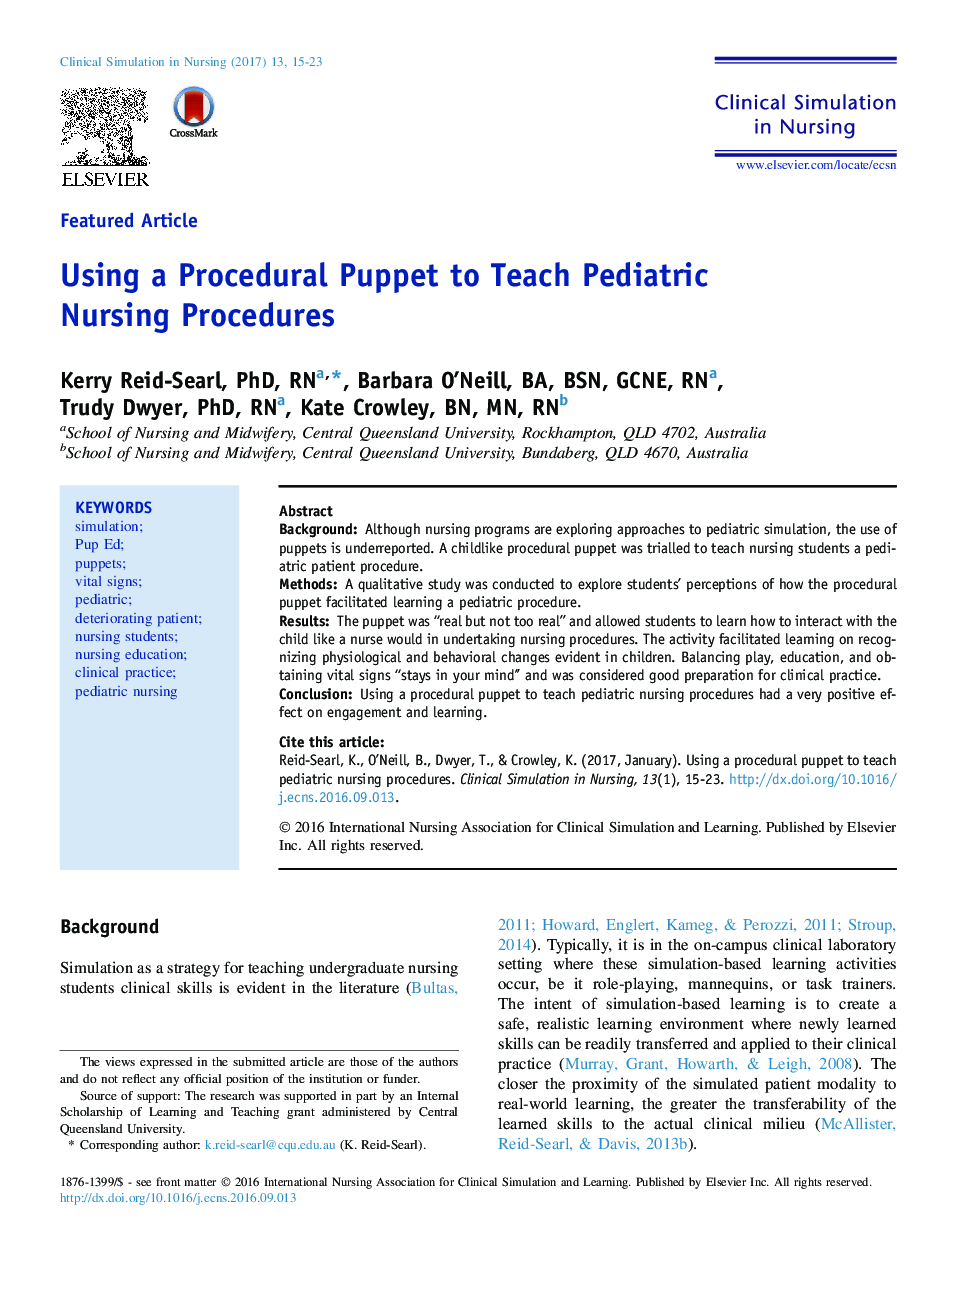 Using a Procedural Puppet to Teach Pediatric Nursing Procedures